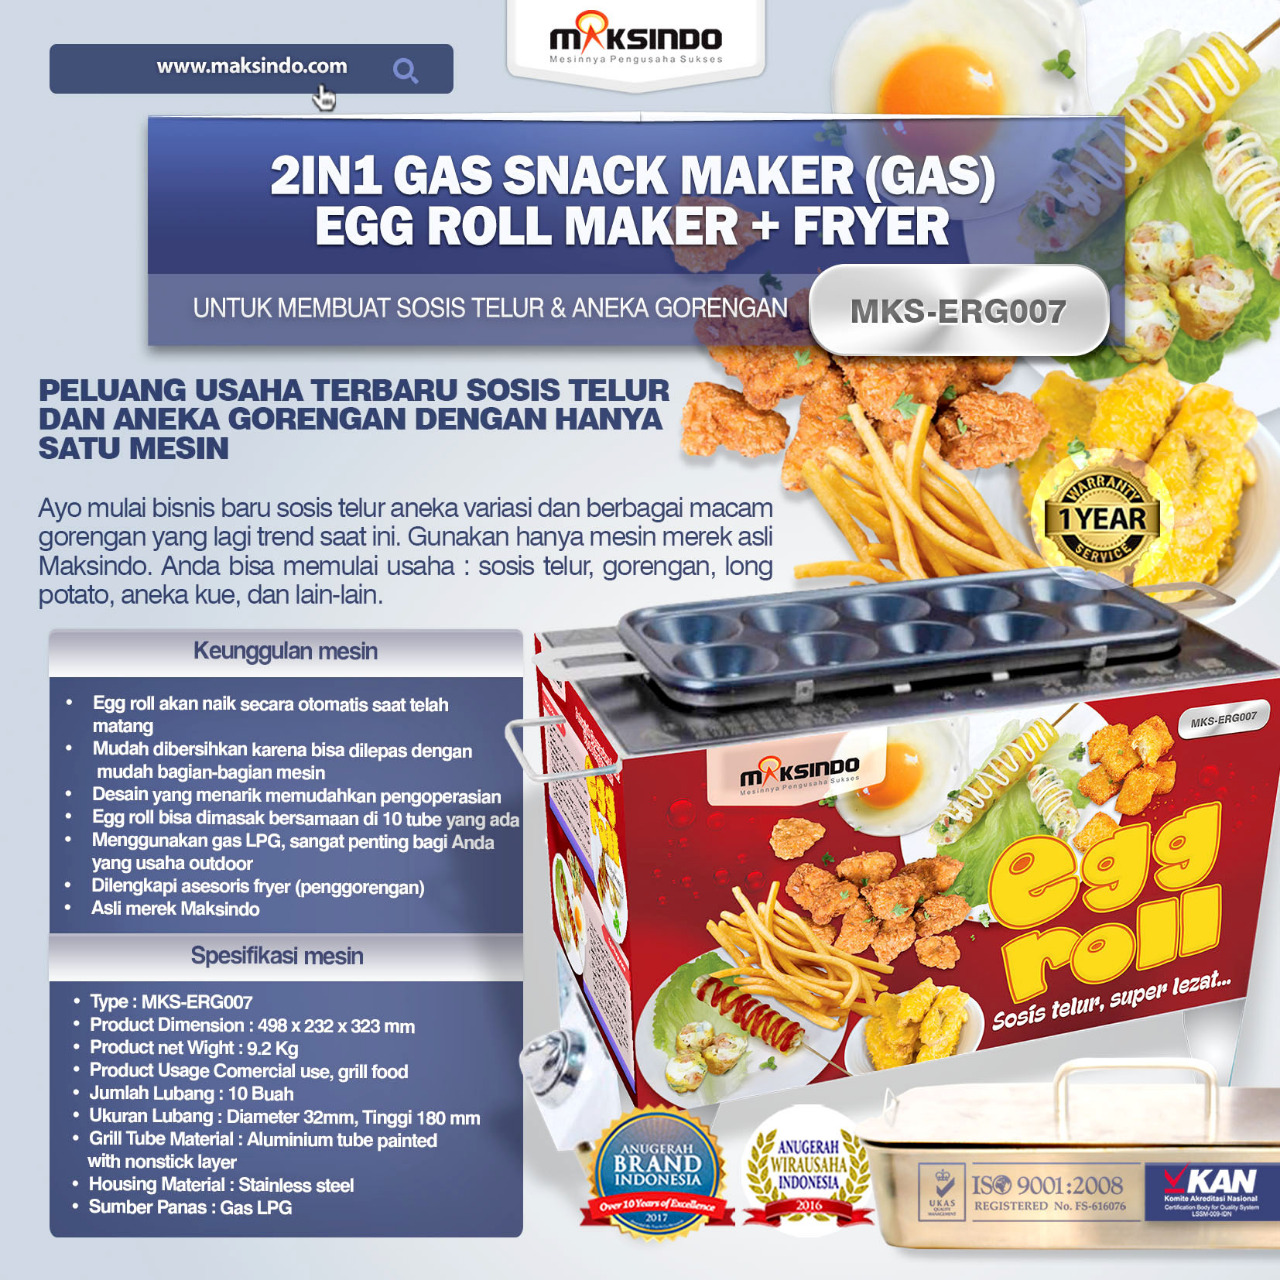 Jual Mesin Egg Roll Gas 2in1 Plus Fryer ERG007 Maksindo di Yogyakarta